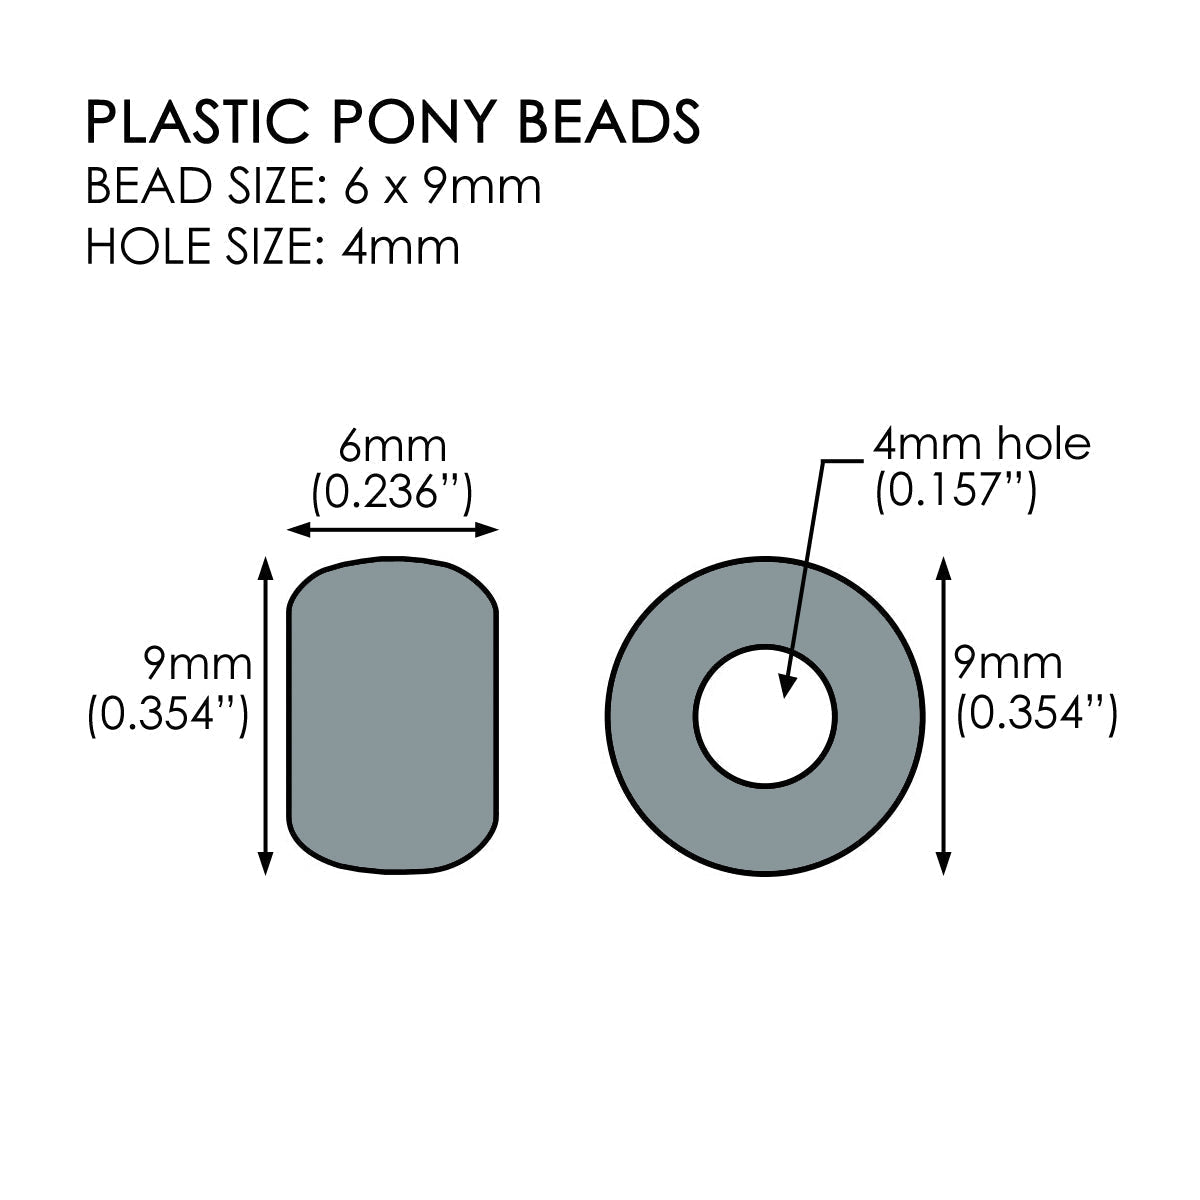 Bright Opaque Mix Craft Pony Beads 6 x 9mm Bulk Assortment, USA